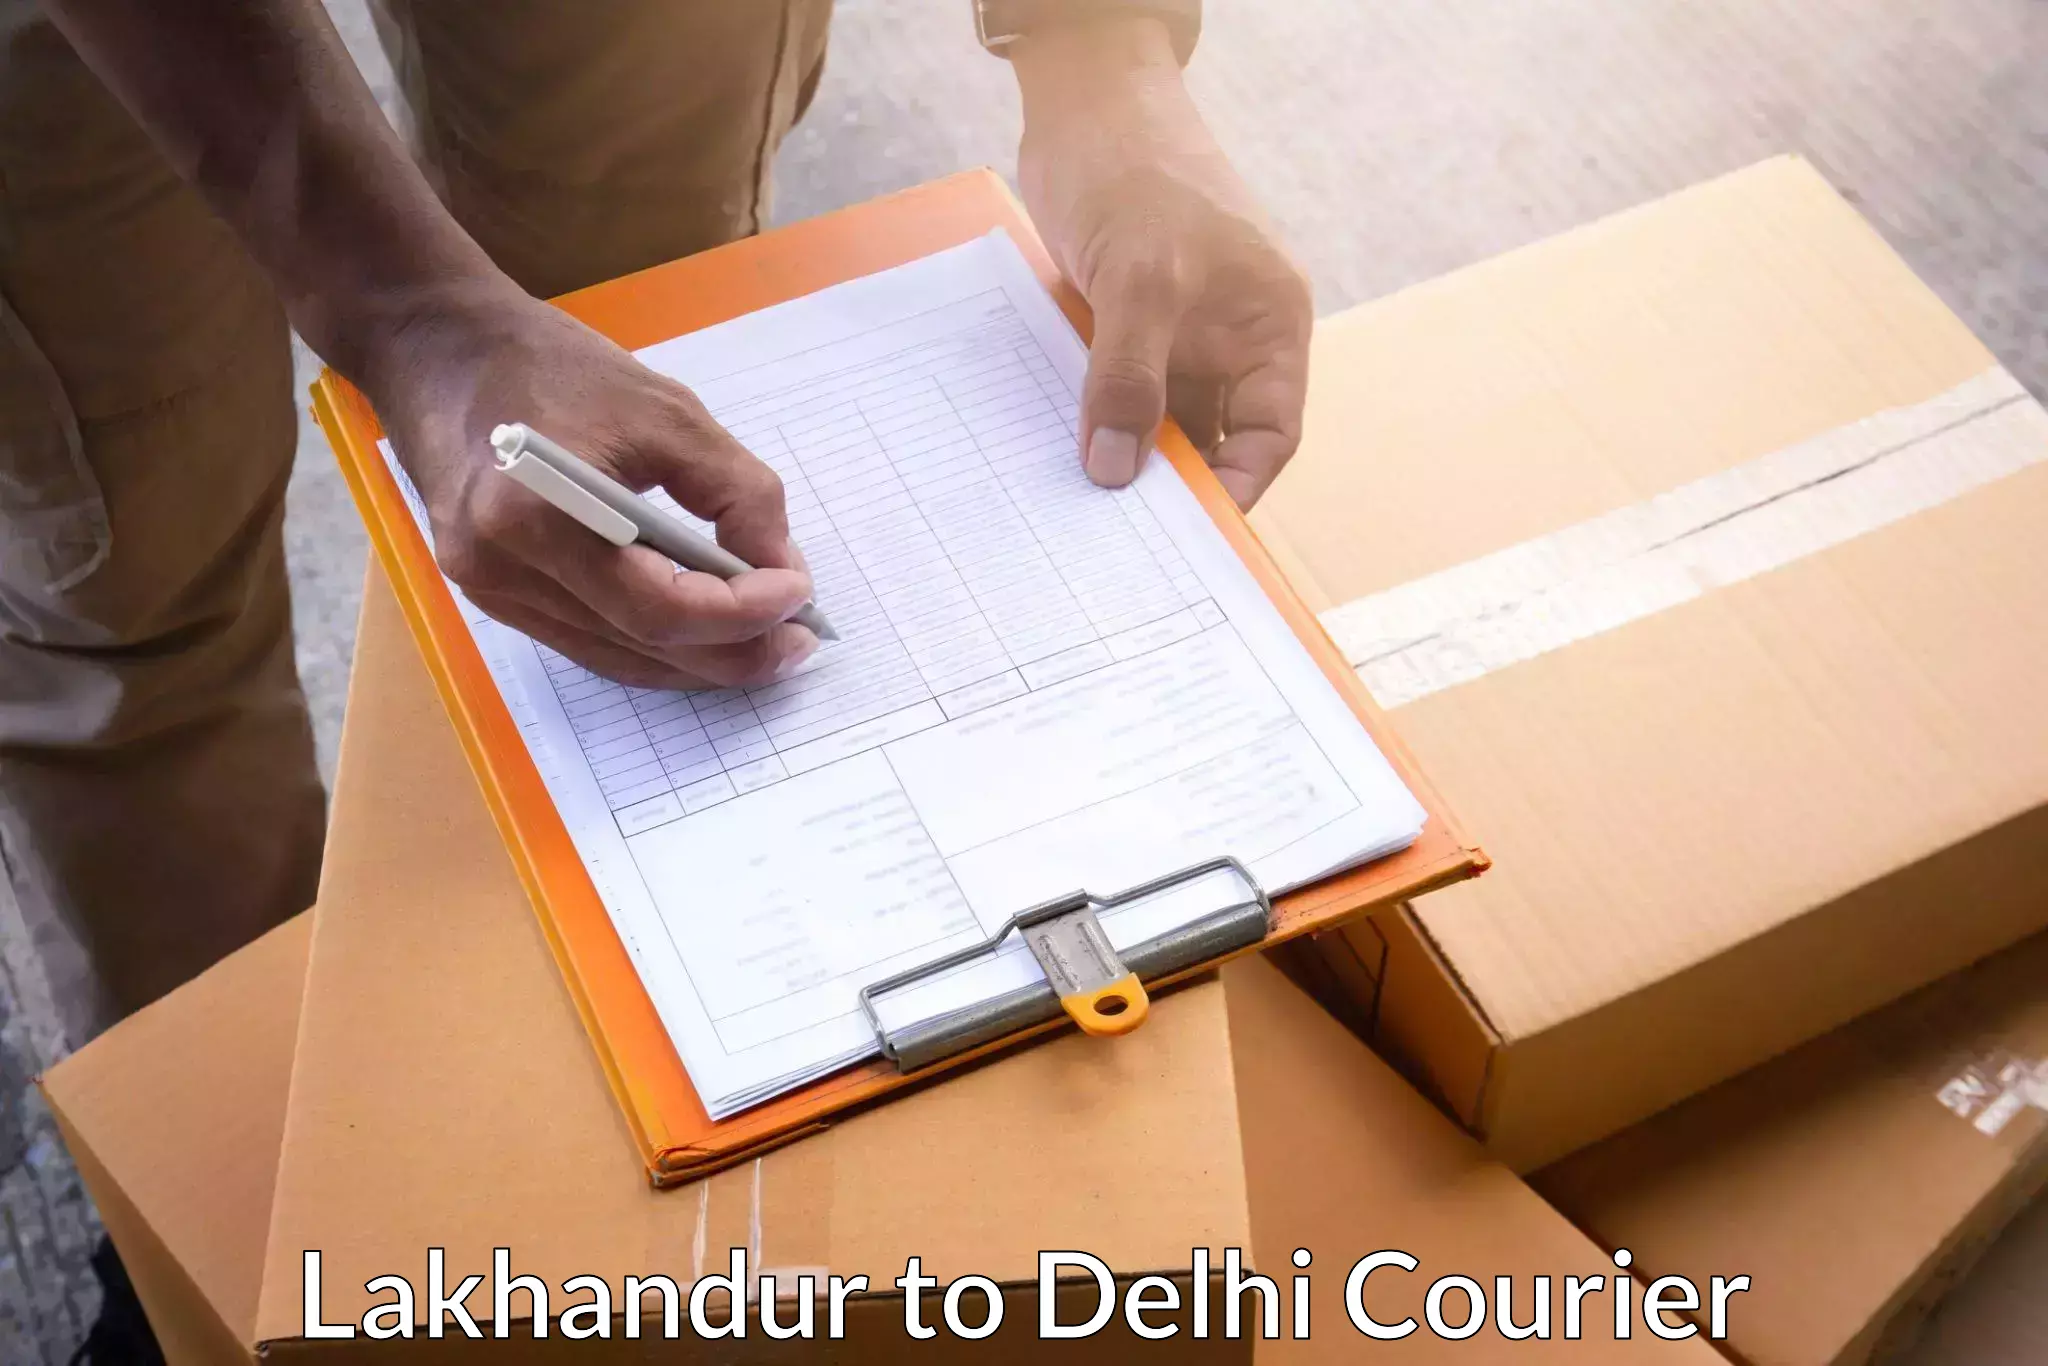 Advanced shipping technology Lakhandur to IIT Delhi